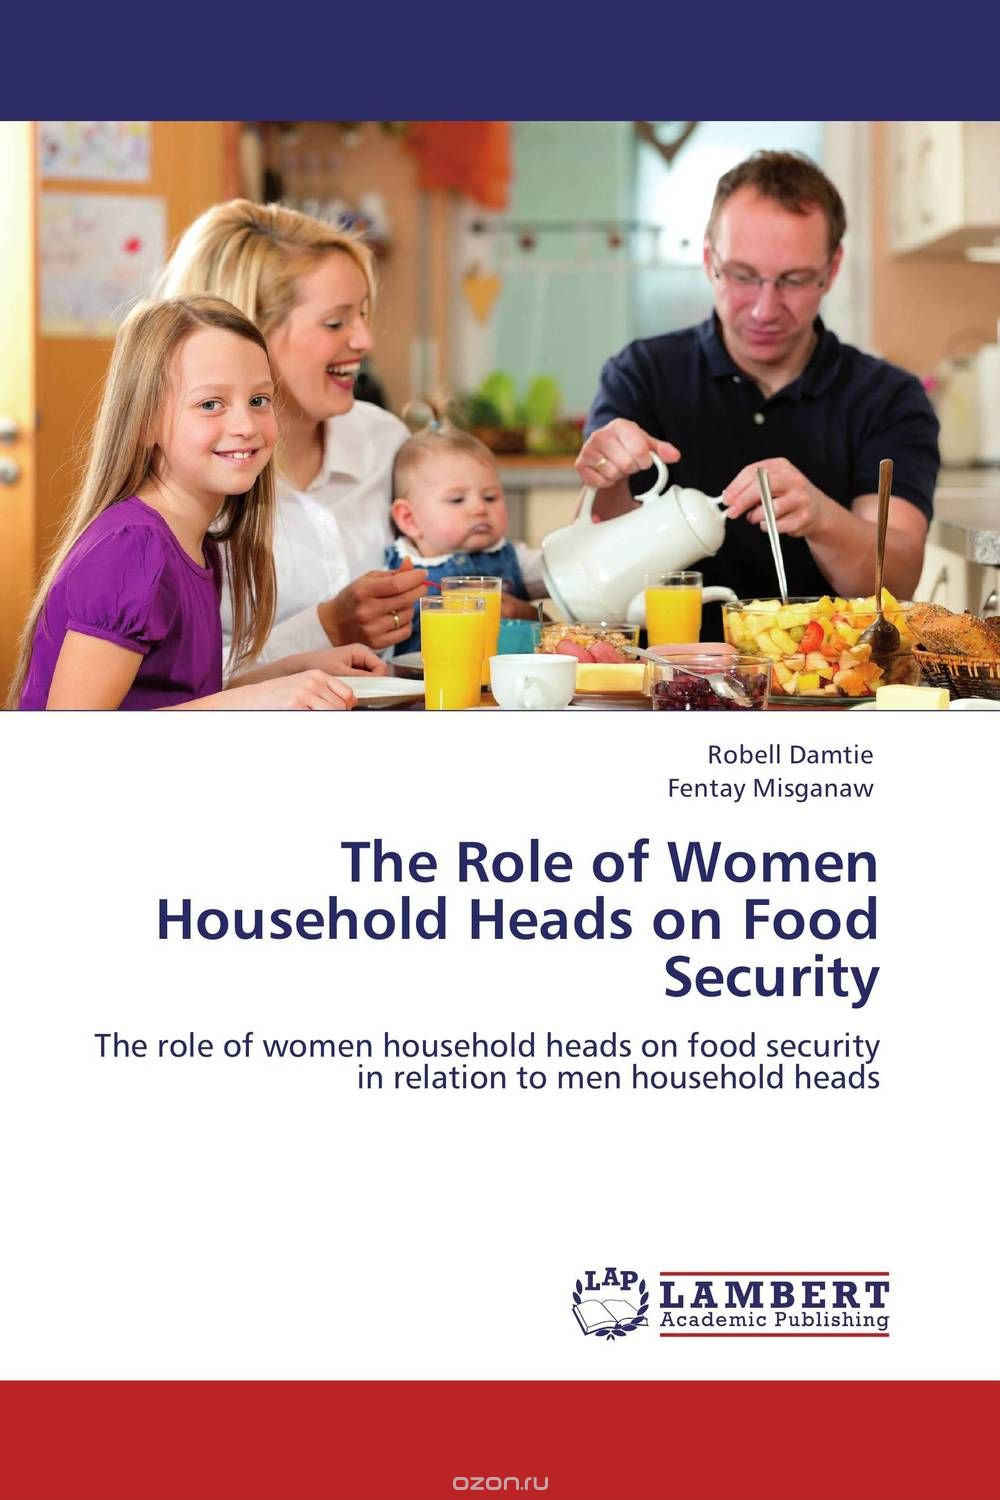 Скачать книгу "The Role of Women Household Heads on Food Security"